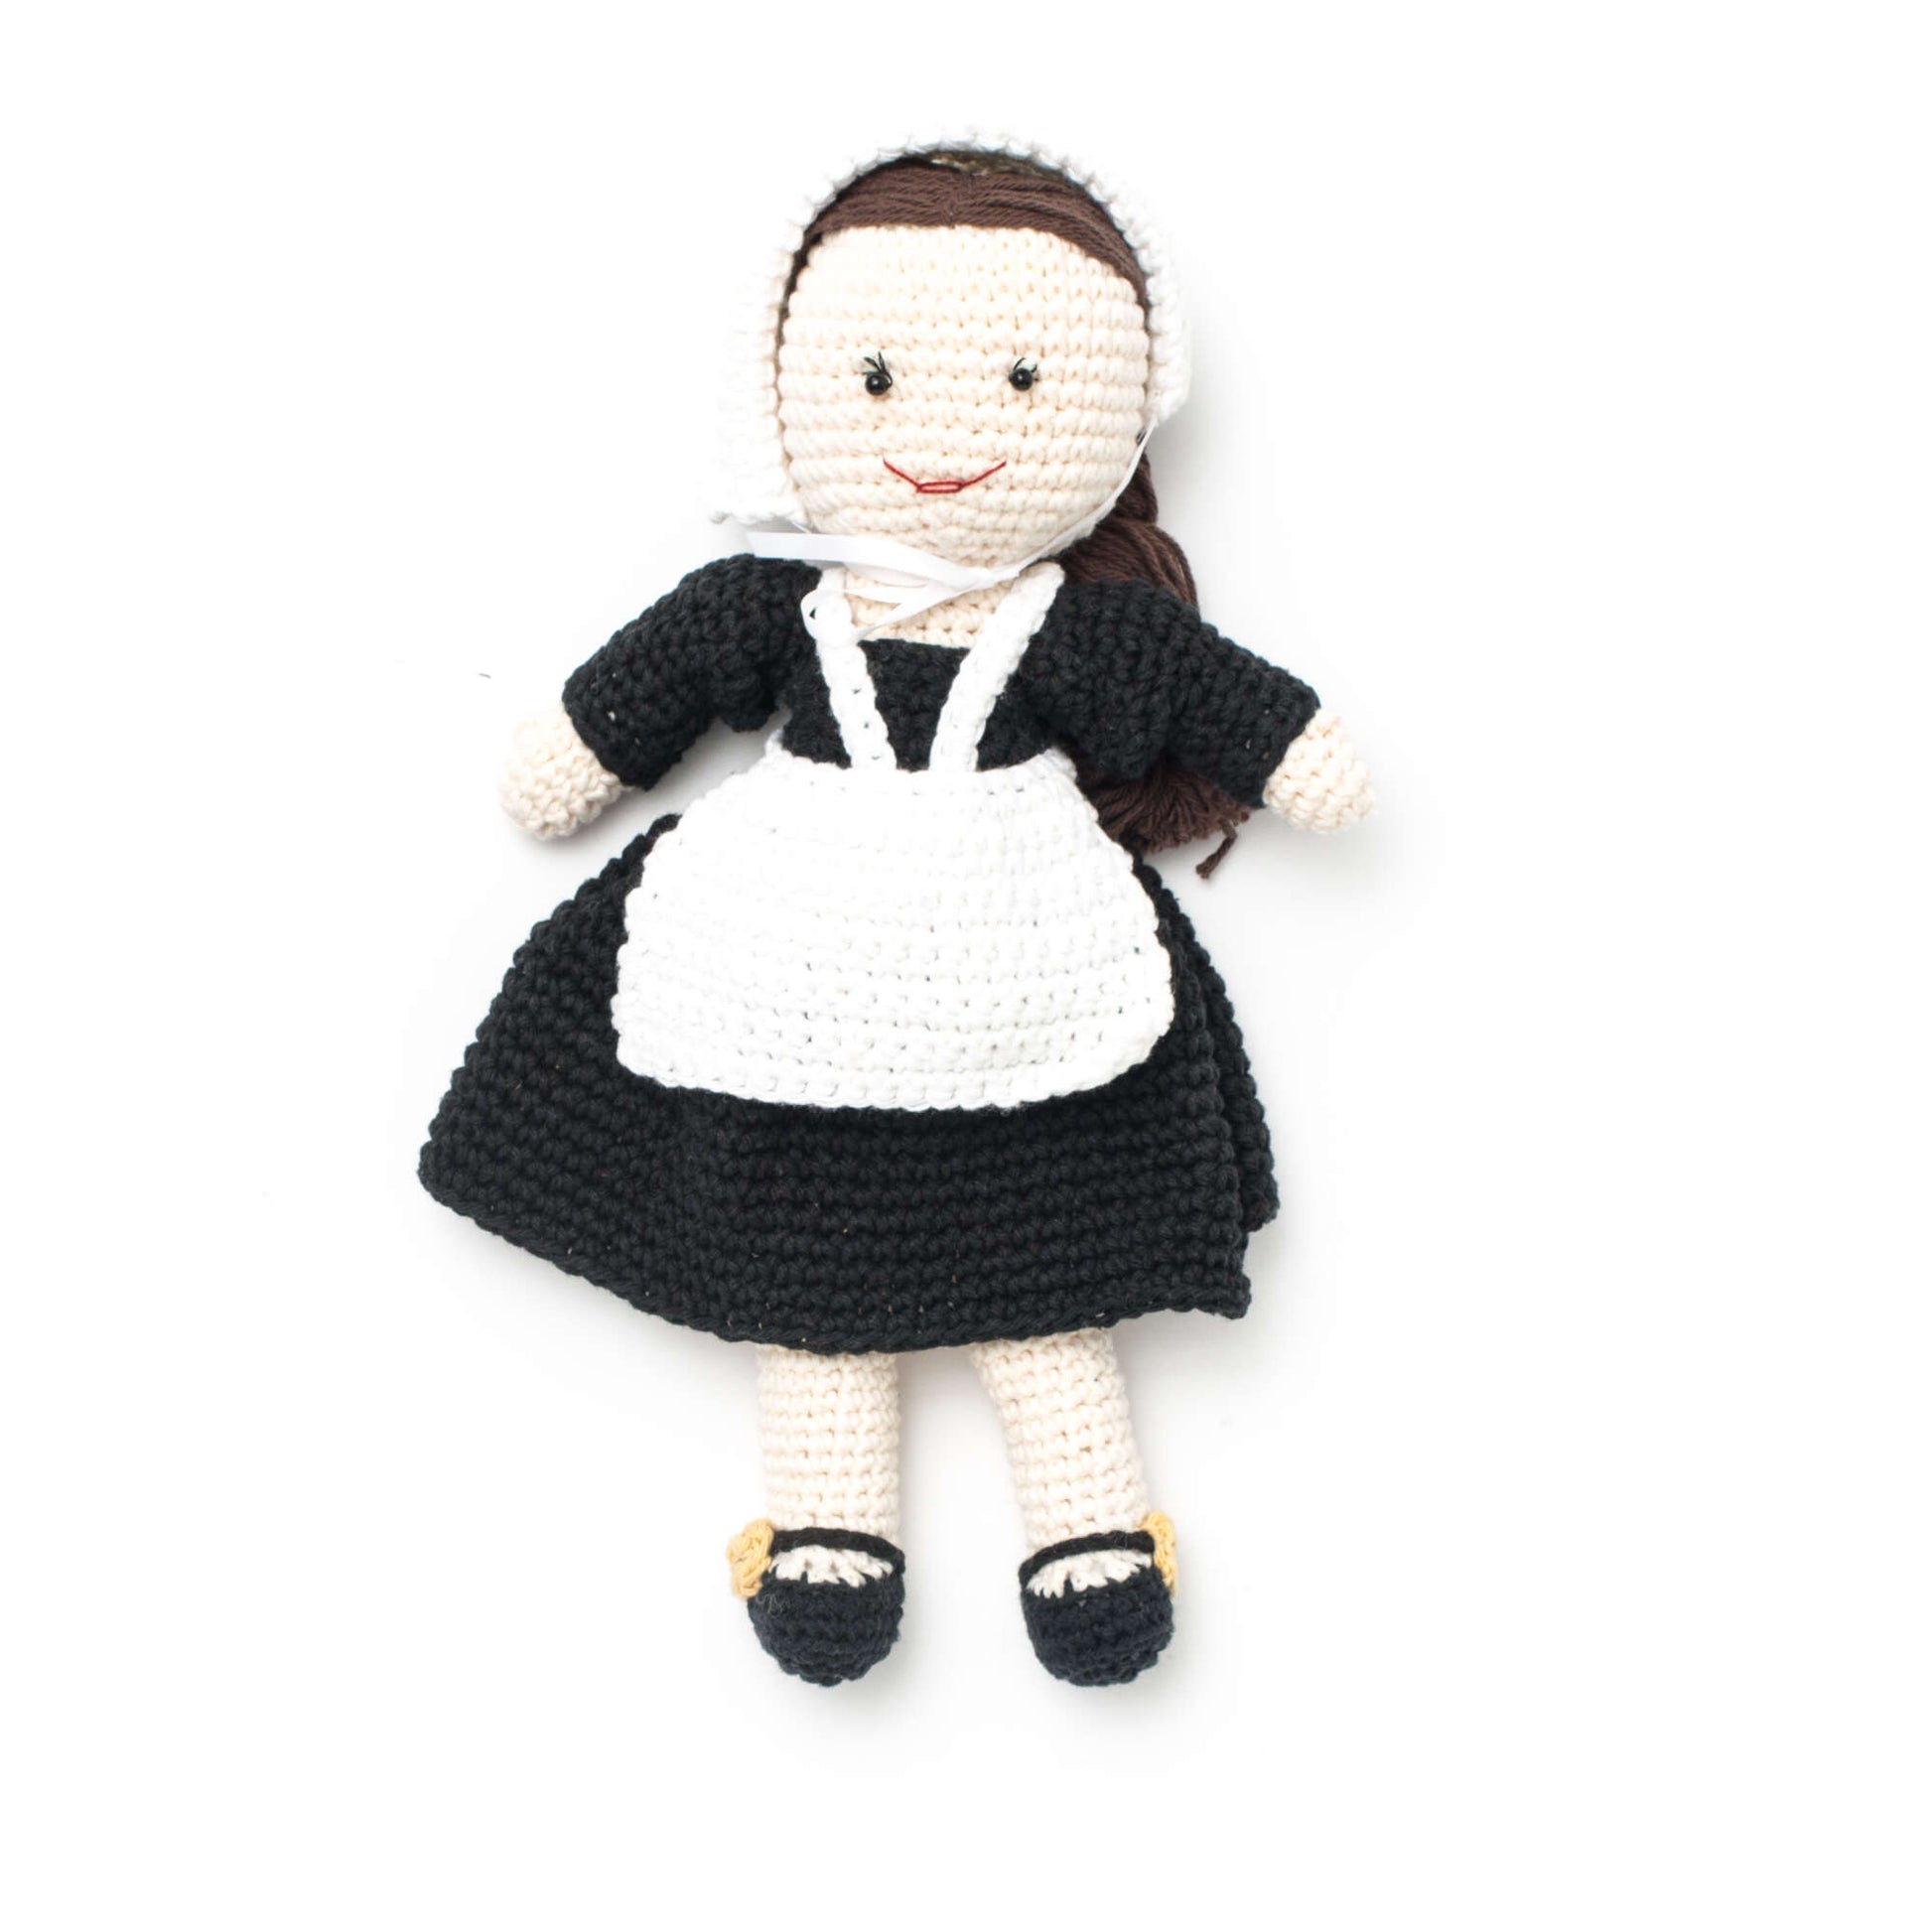 Free Lily Sugar'n Cream Pilgrim Lily Doll Crochet Pattern